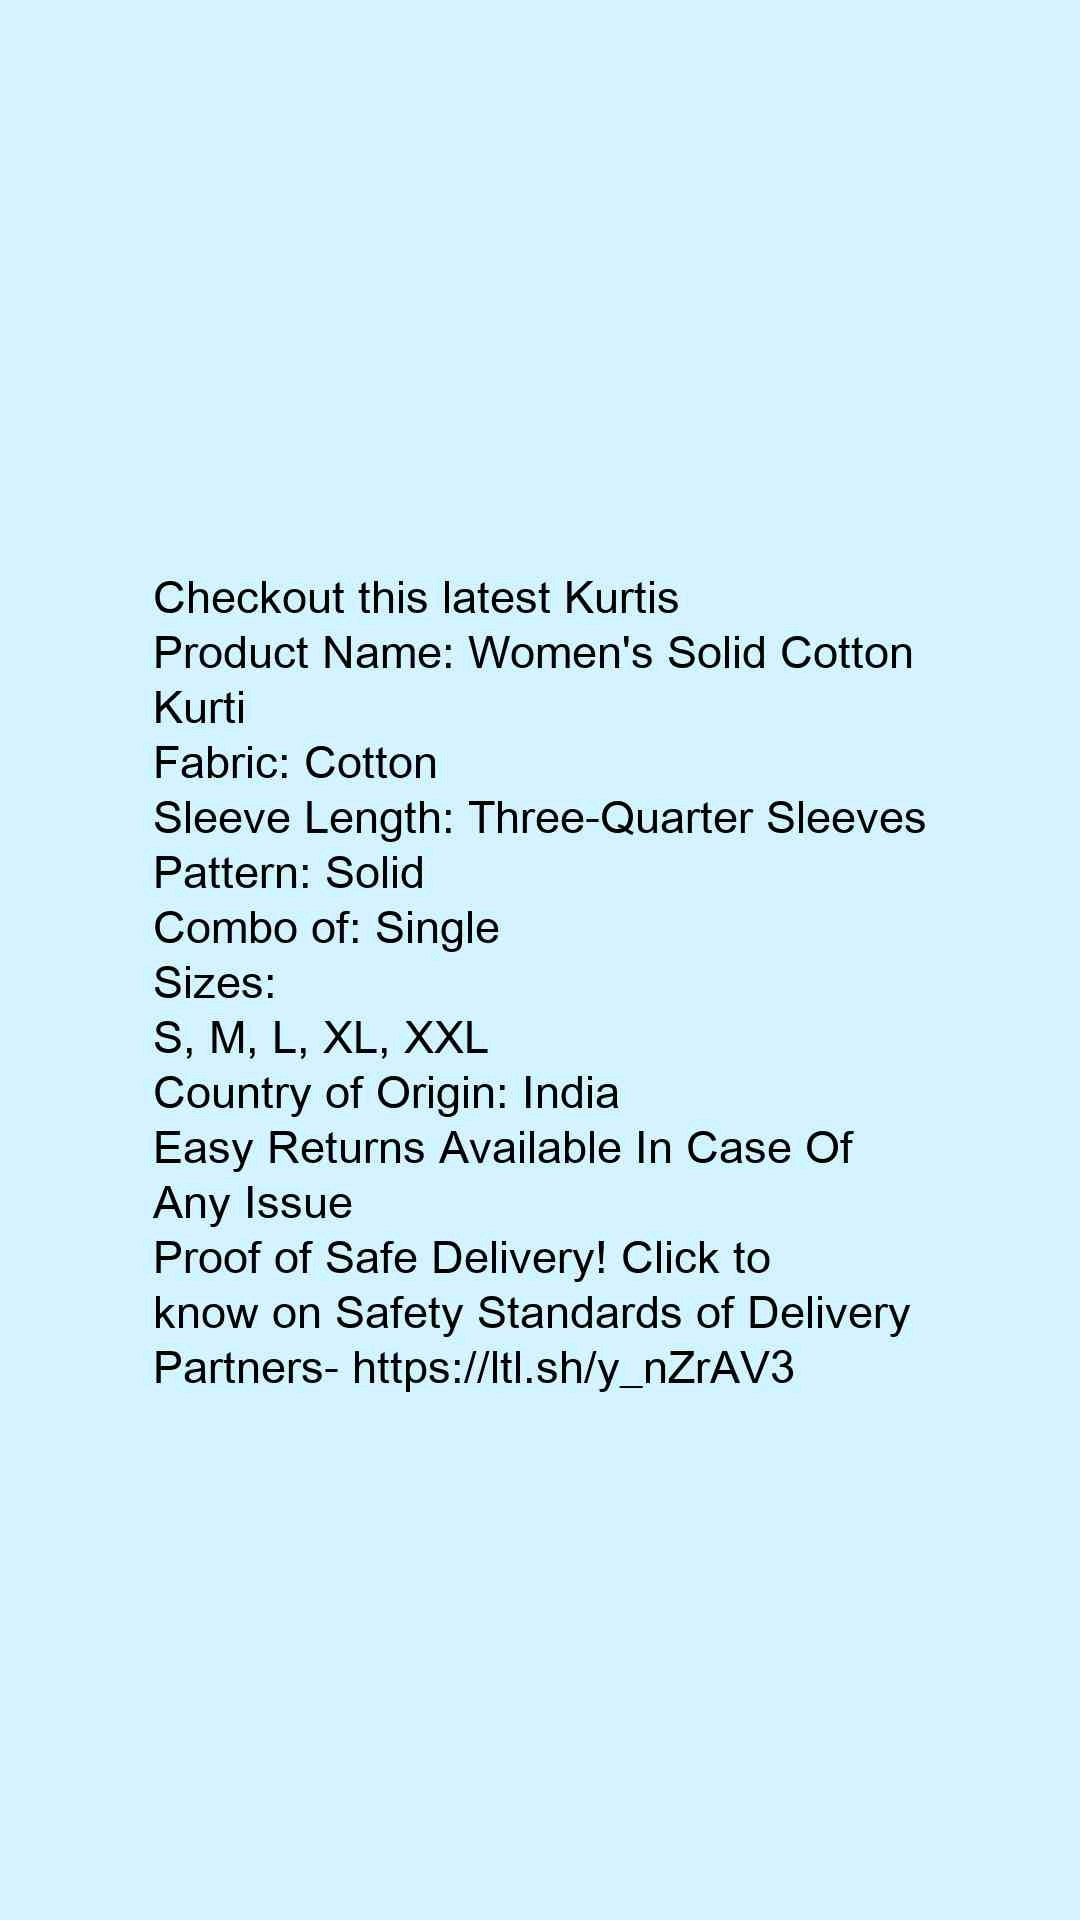 Women's Solid Cotton Kurti